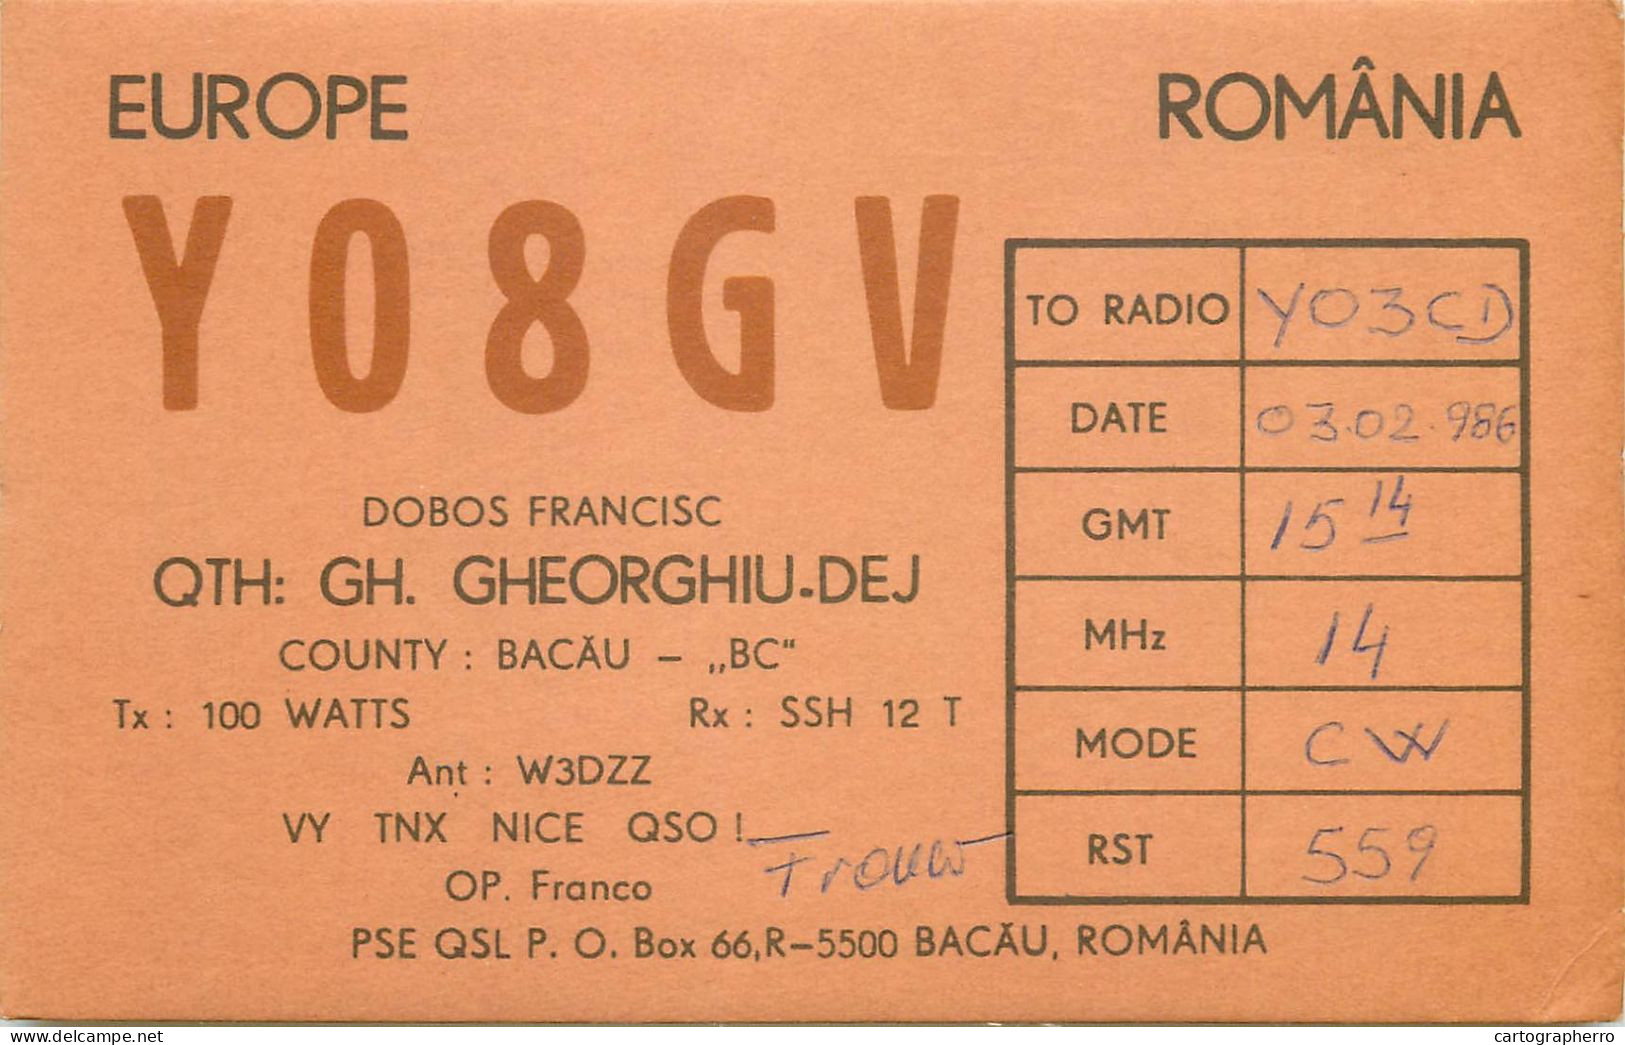 Romania Radio Amateur QSL Post Card Y03CD Y08GV - Radio Amateur